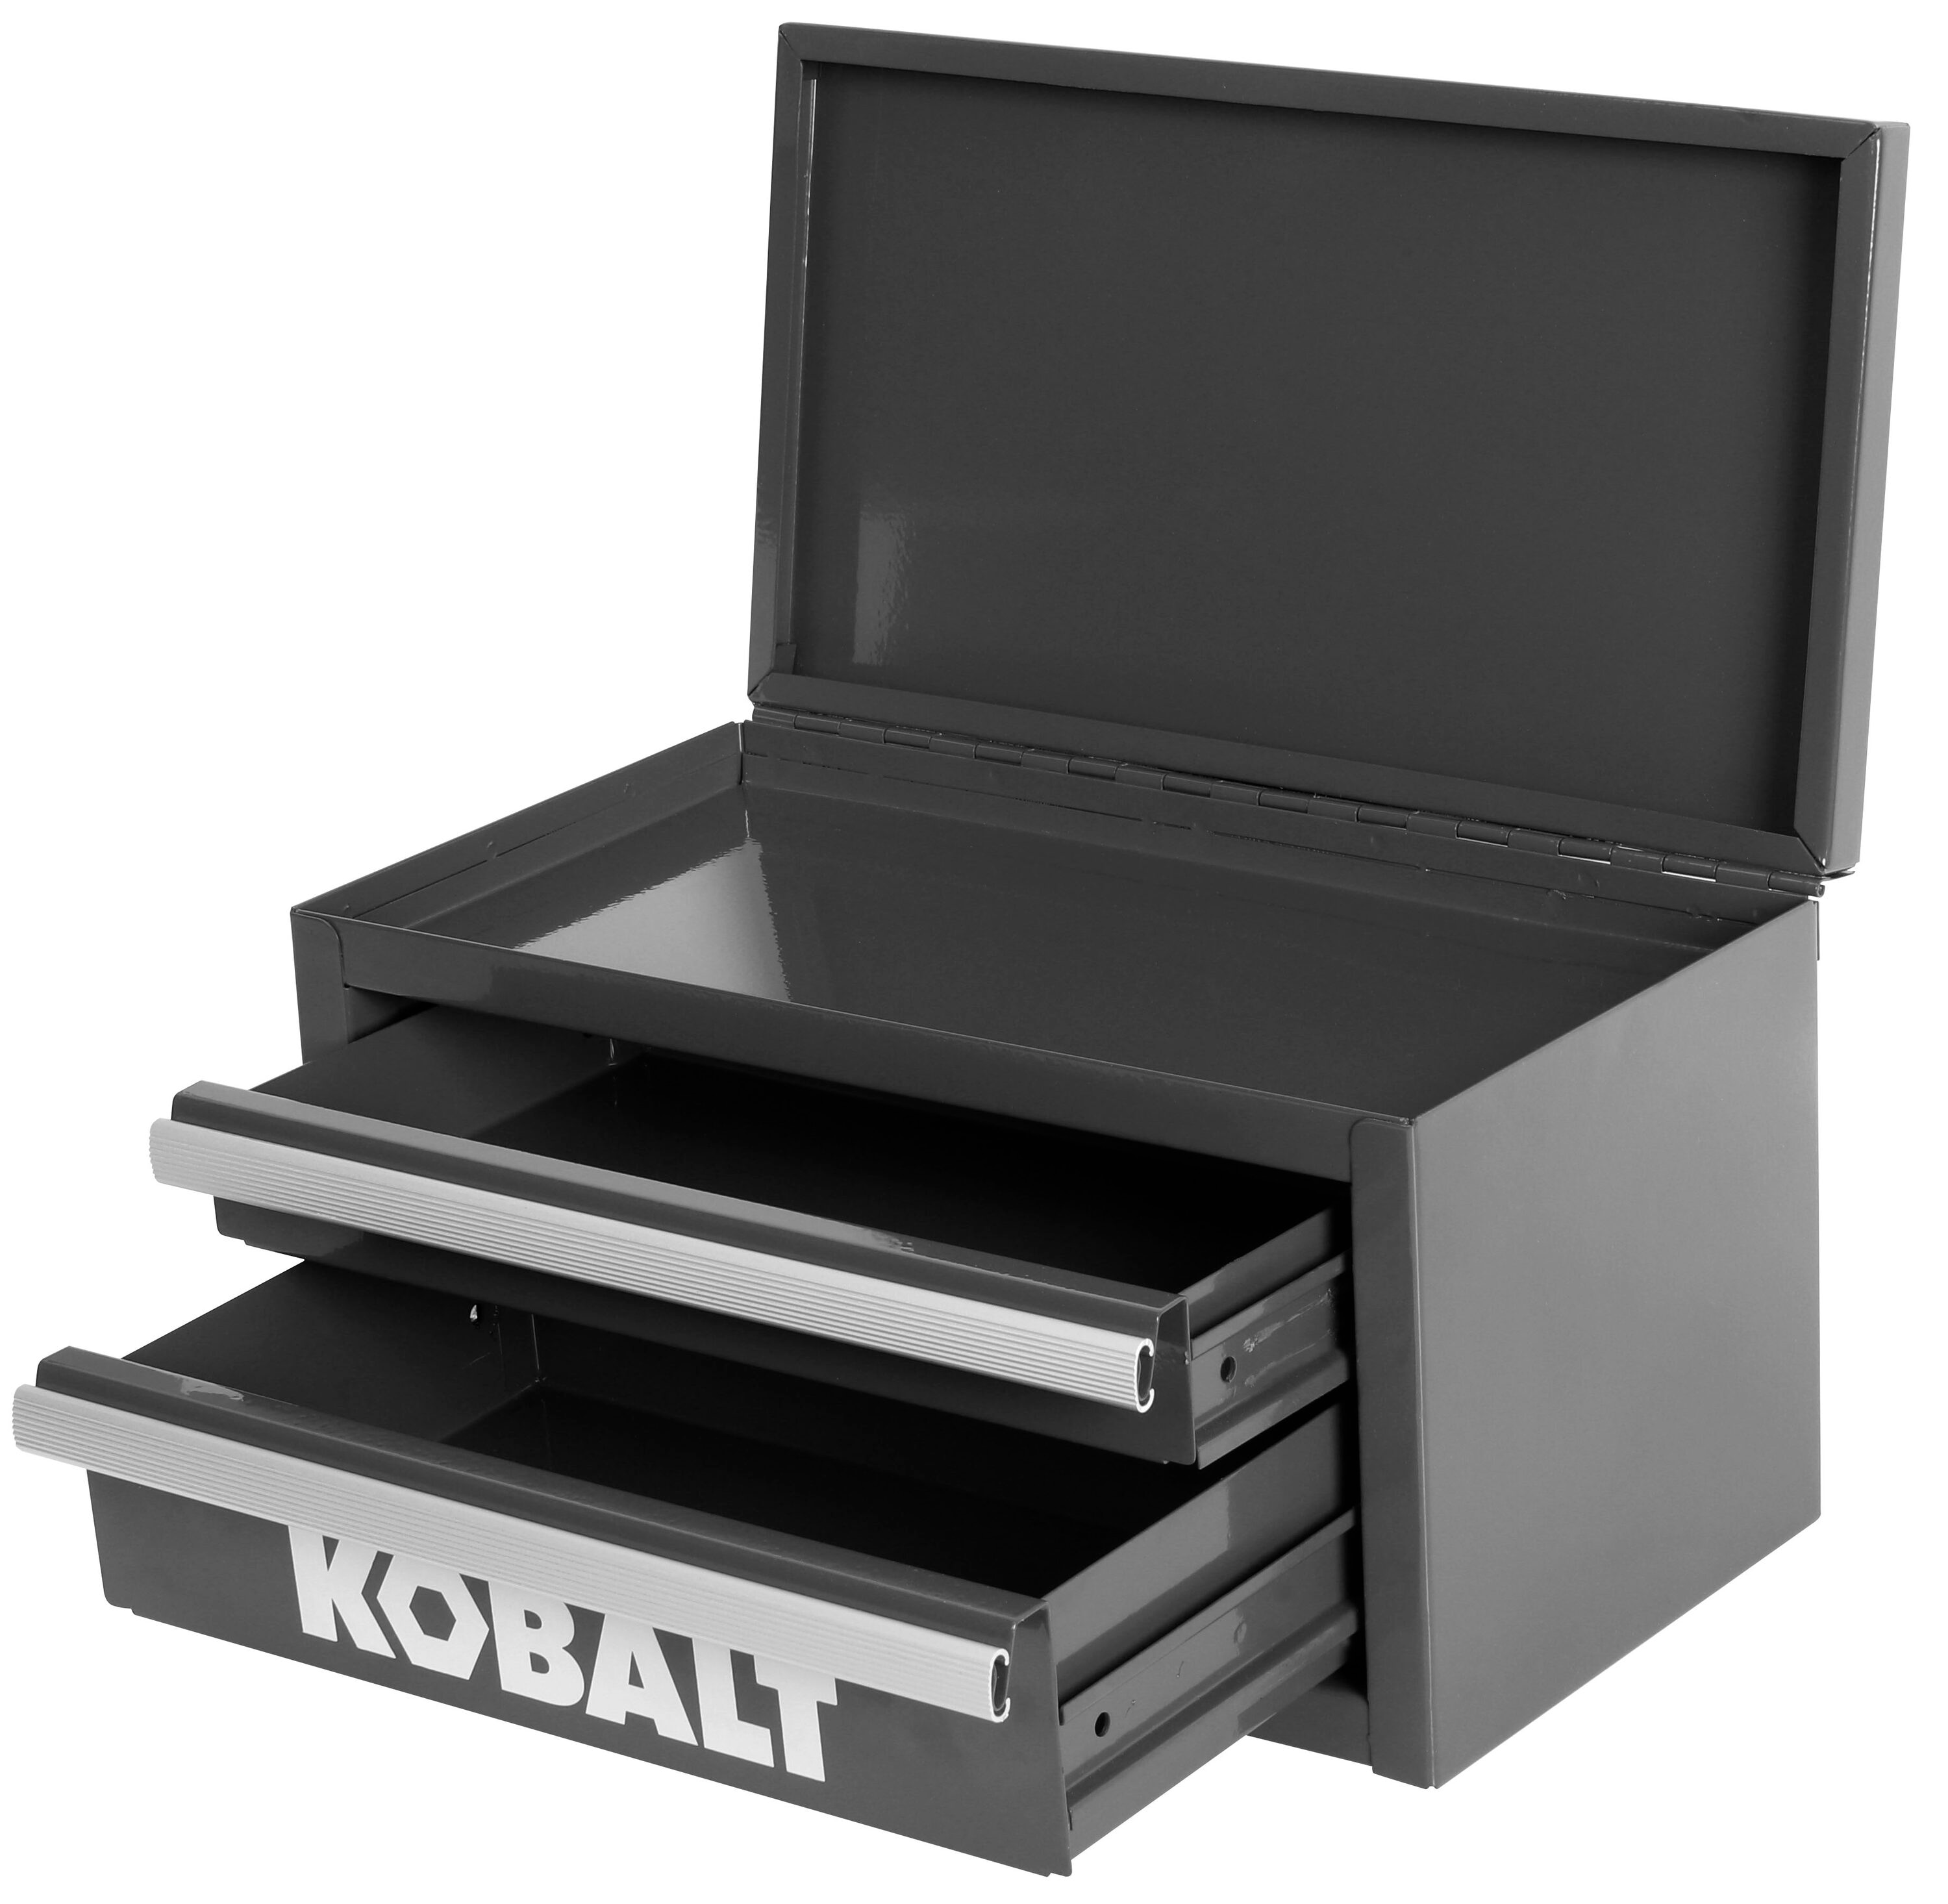 Lowe's has New Mini Kobalt Metal Tool Chest